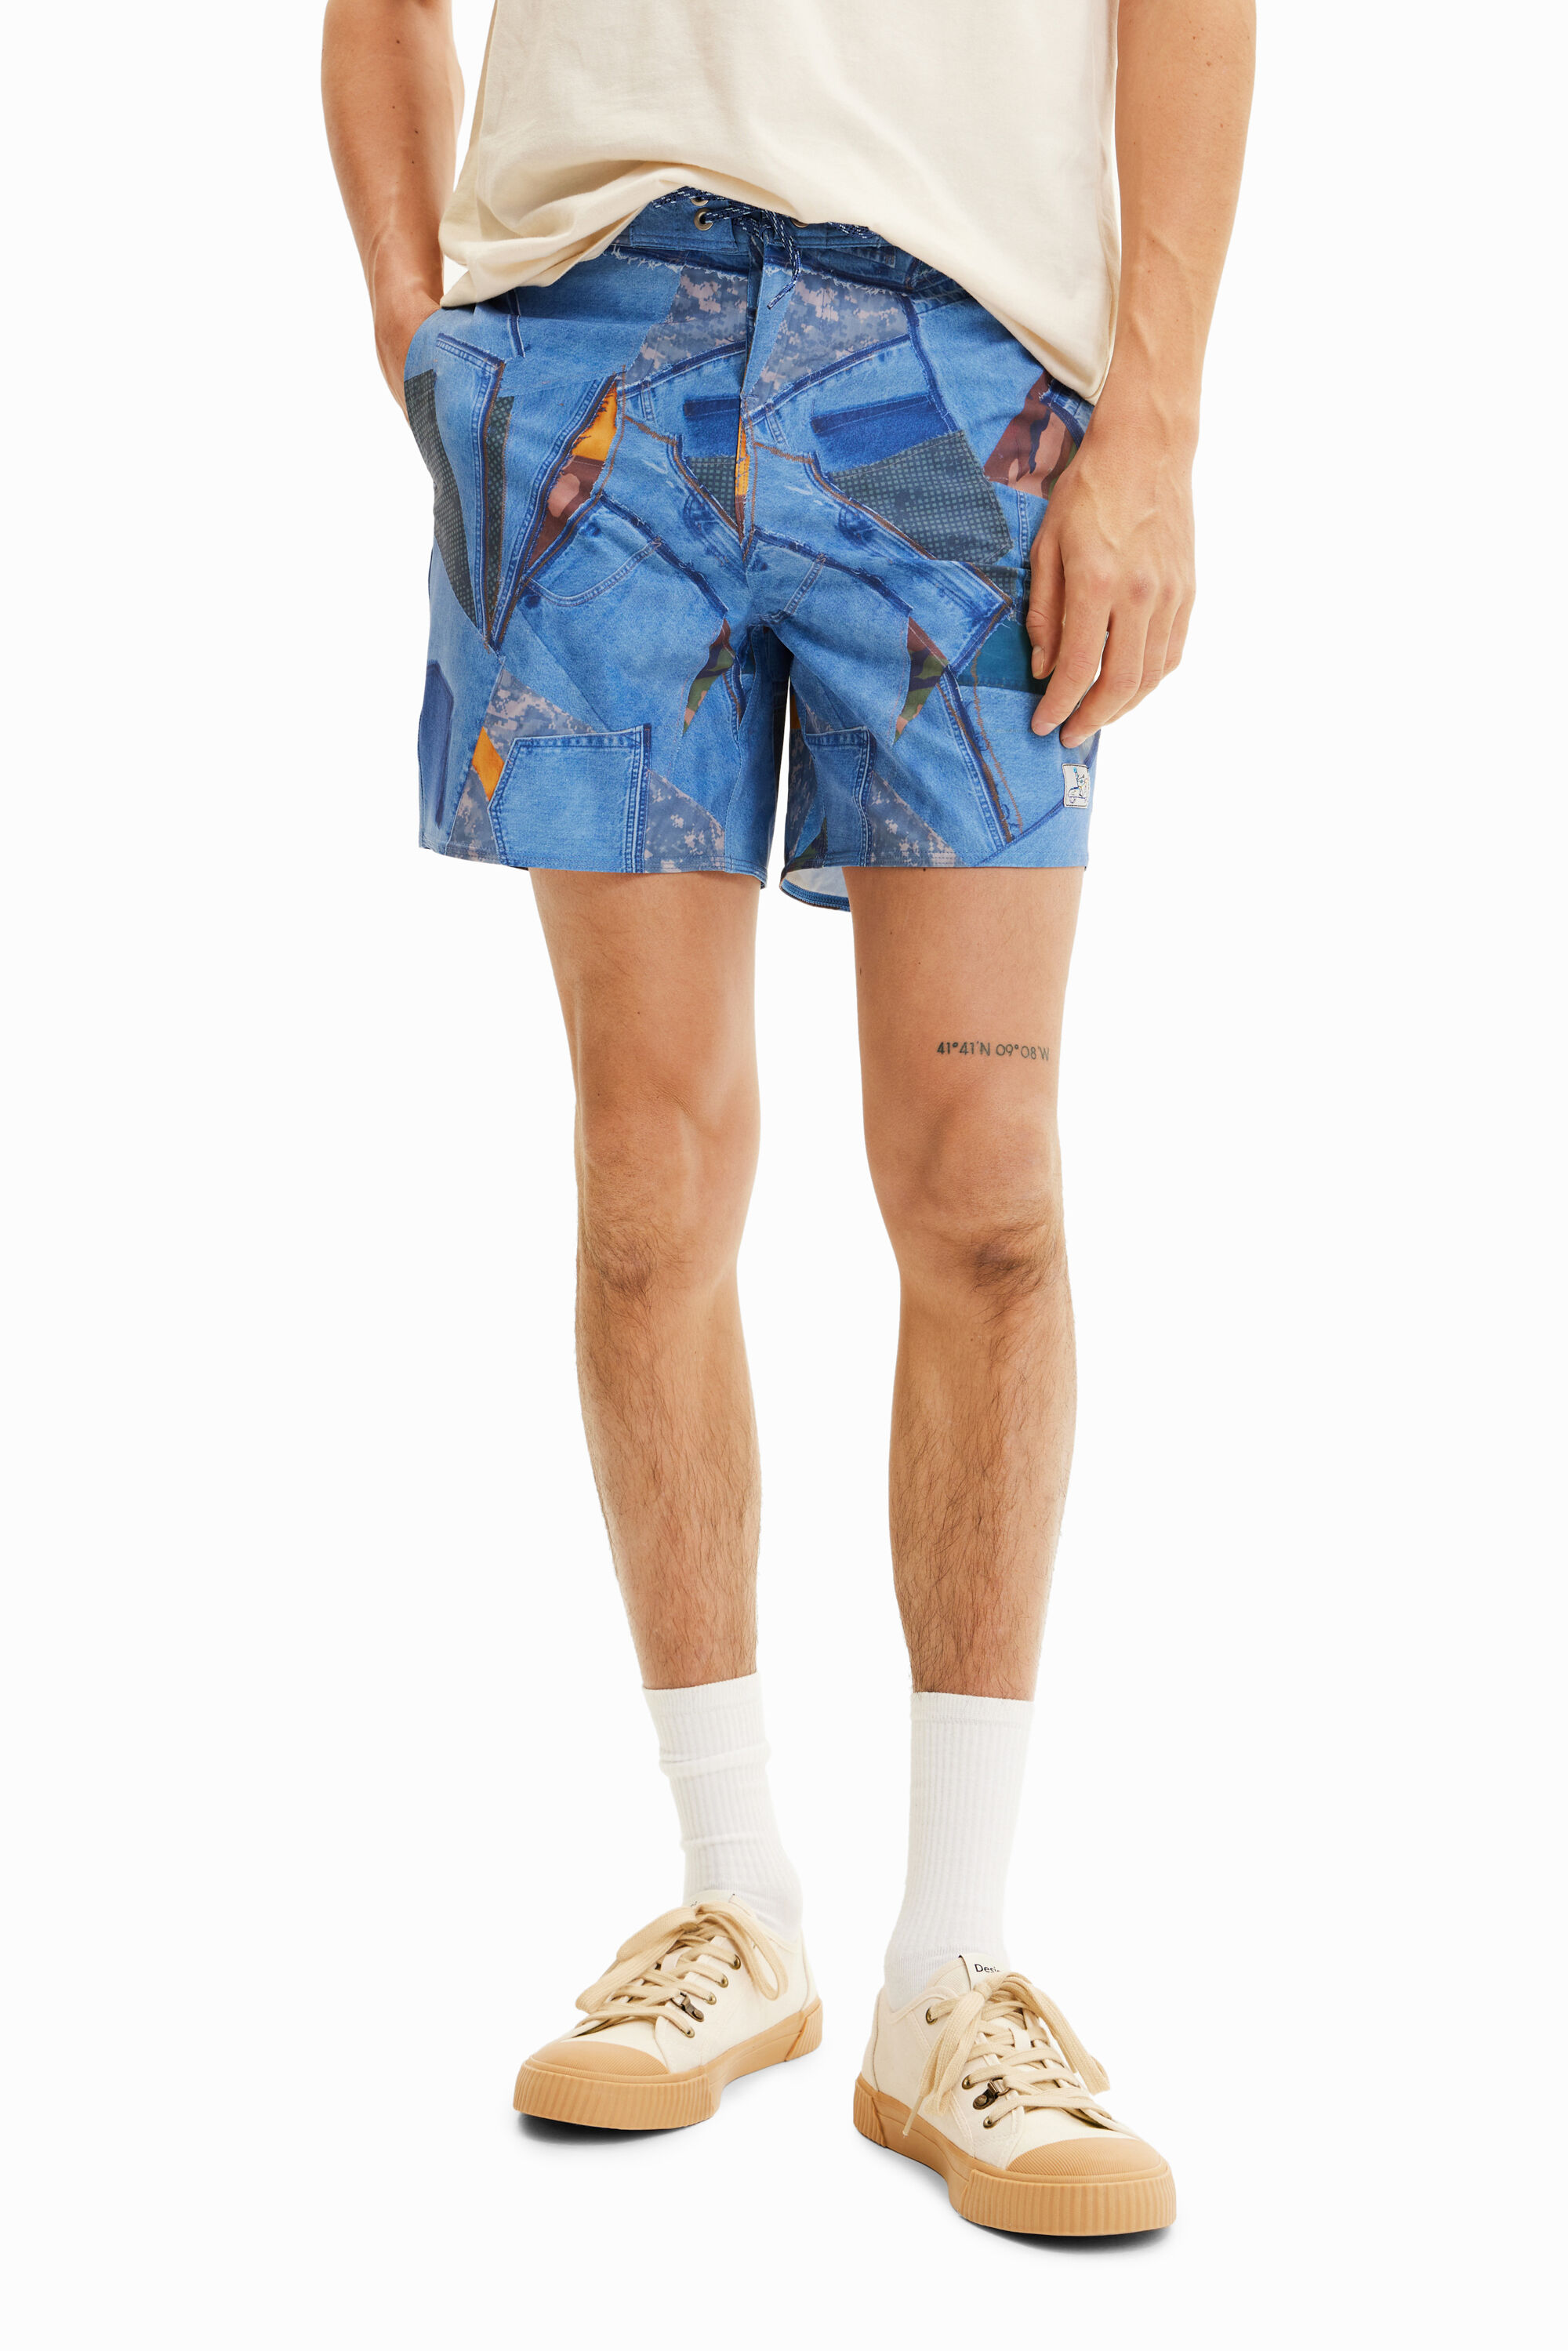 Buy Jollycode Mens Swim Trunks Swimwear Bathing Suits Denim Print Swimsuit  Beach Board Short Light Blue XLarge at Amazonin